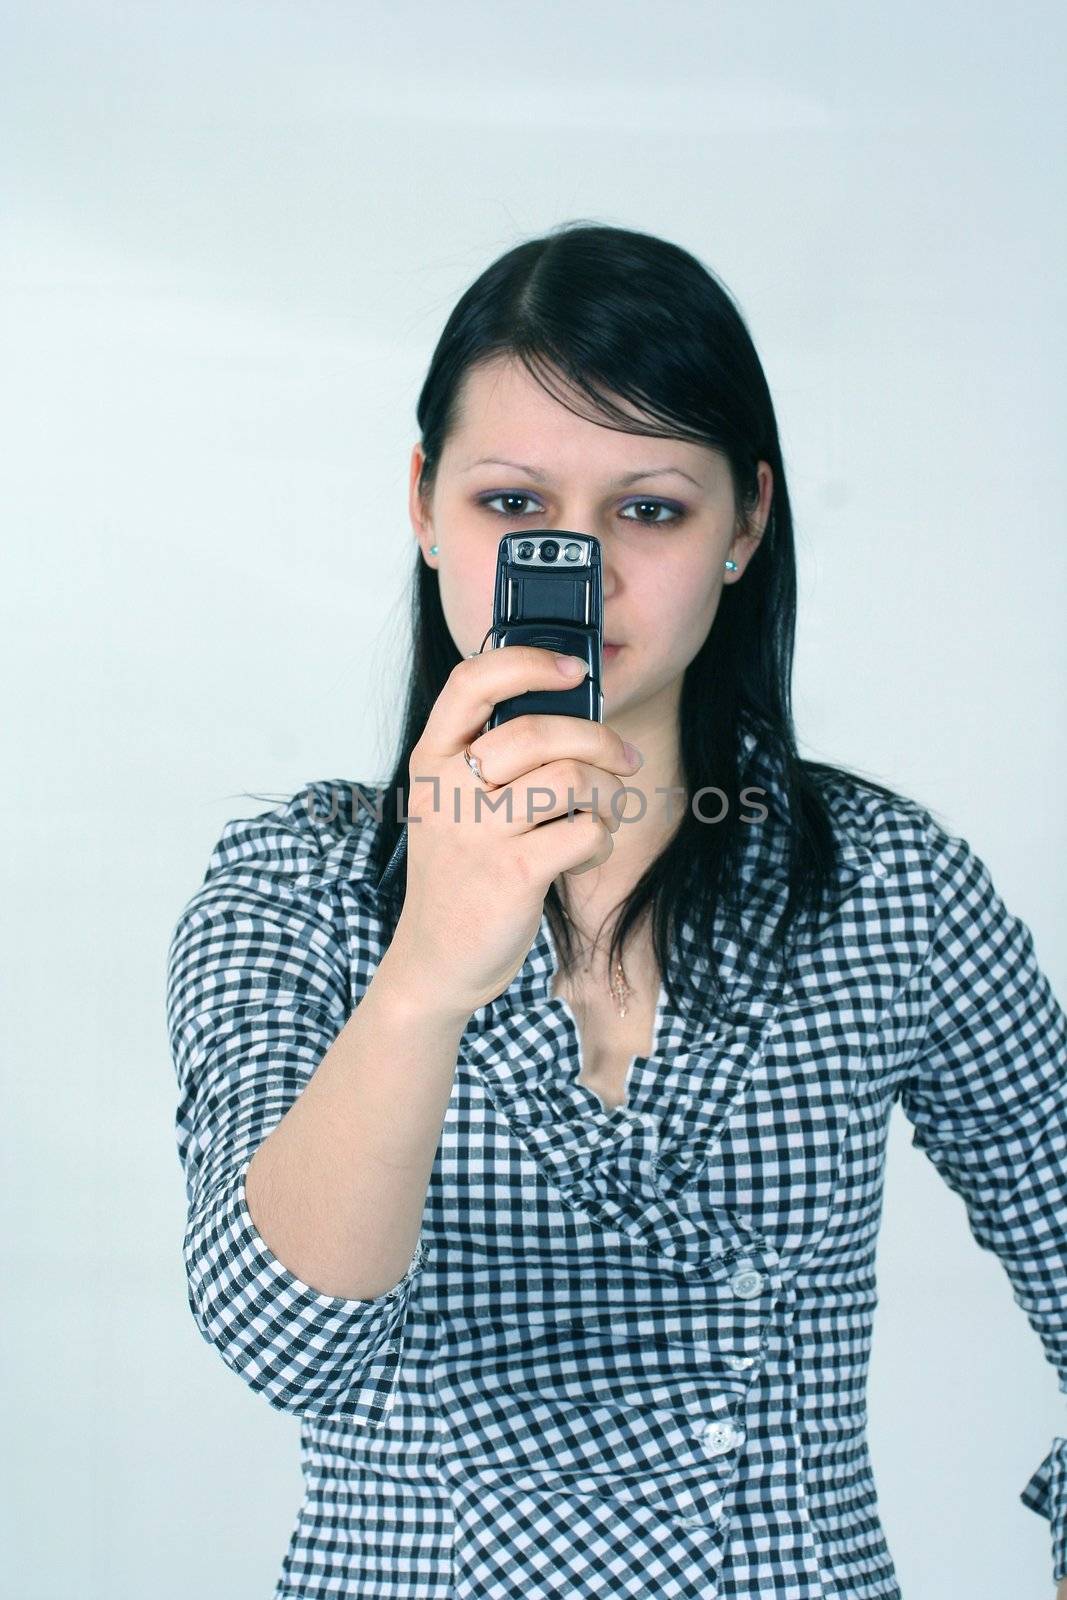  girls business telephone receptionist job technology face camera